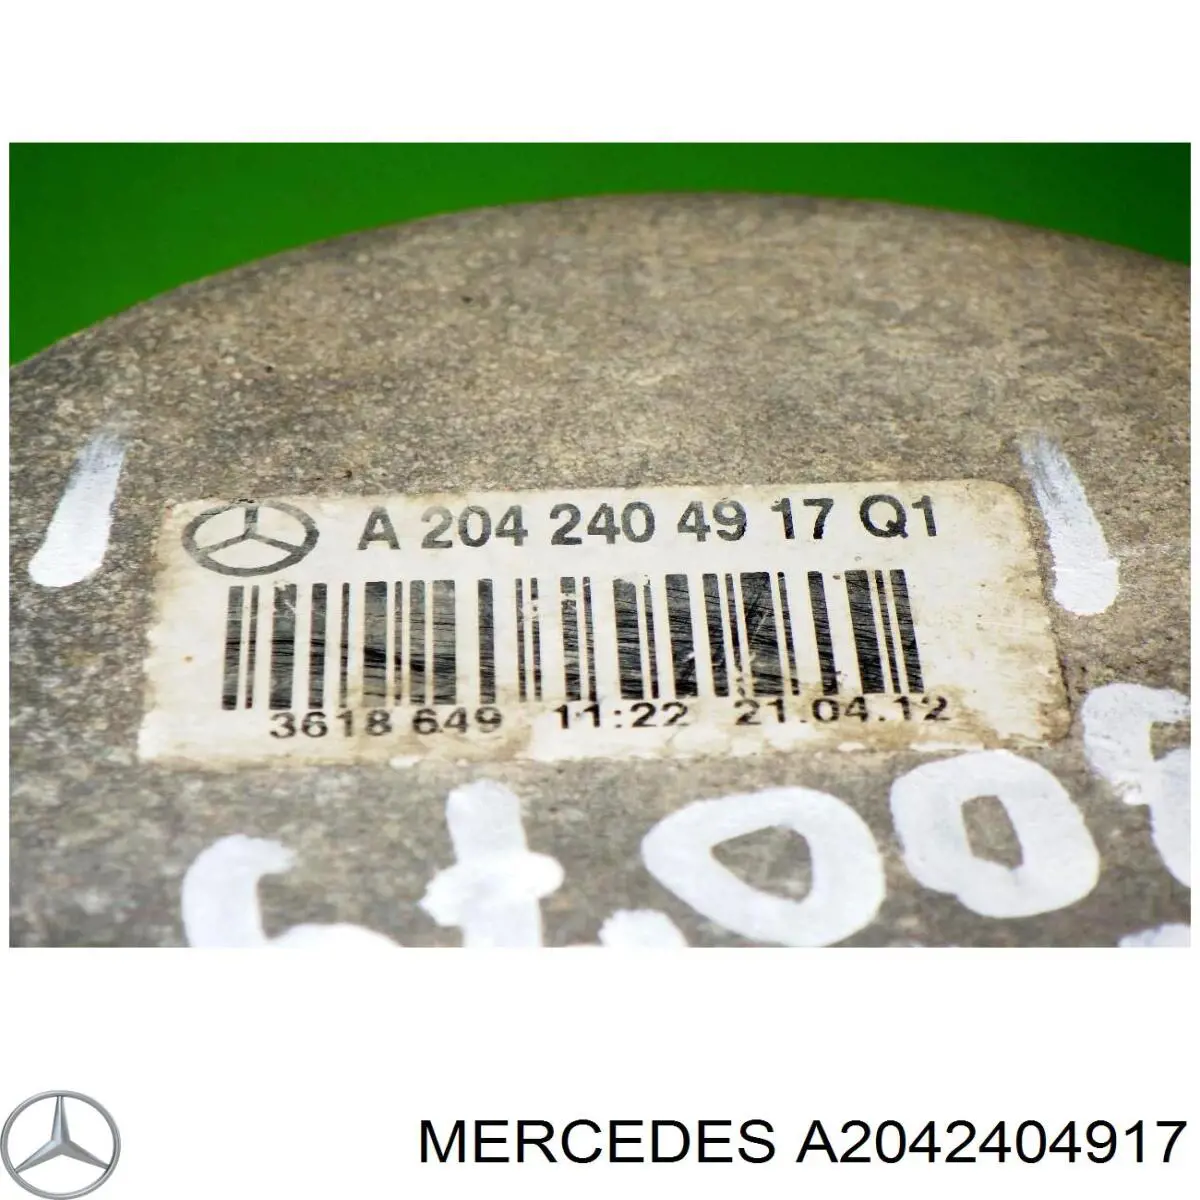 A2042404917 Mercedes soporte de motor derecho